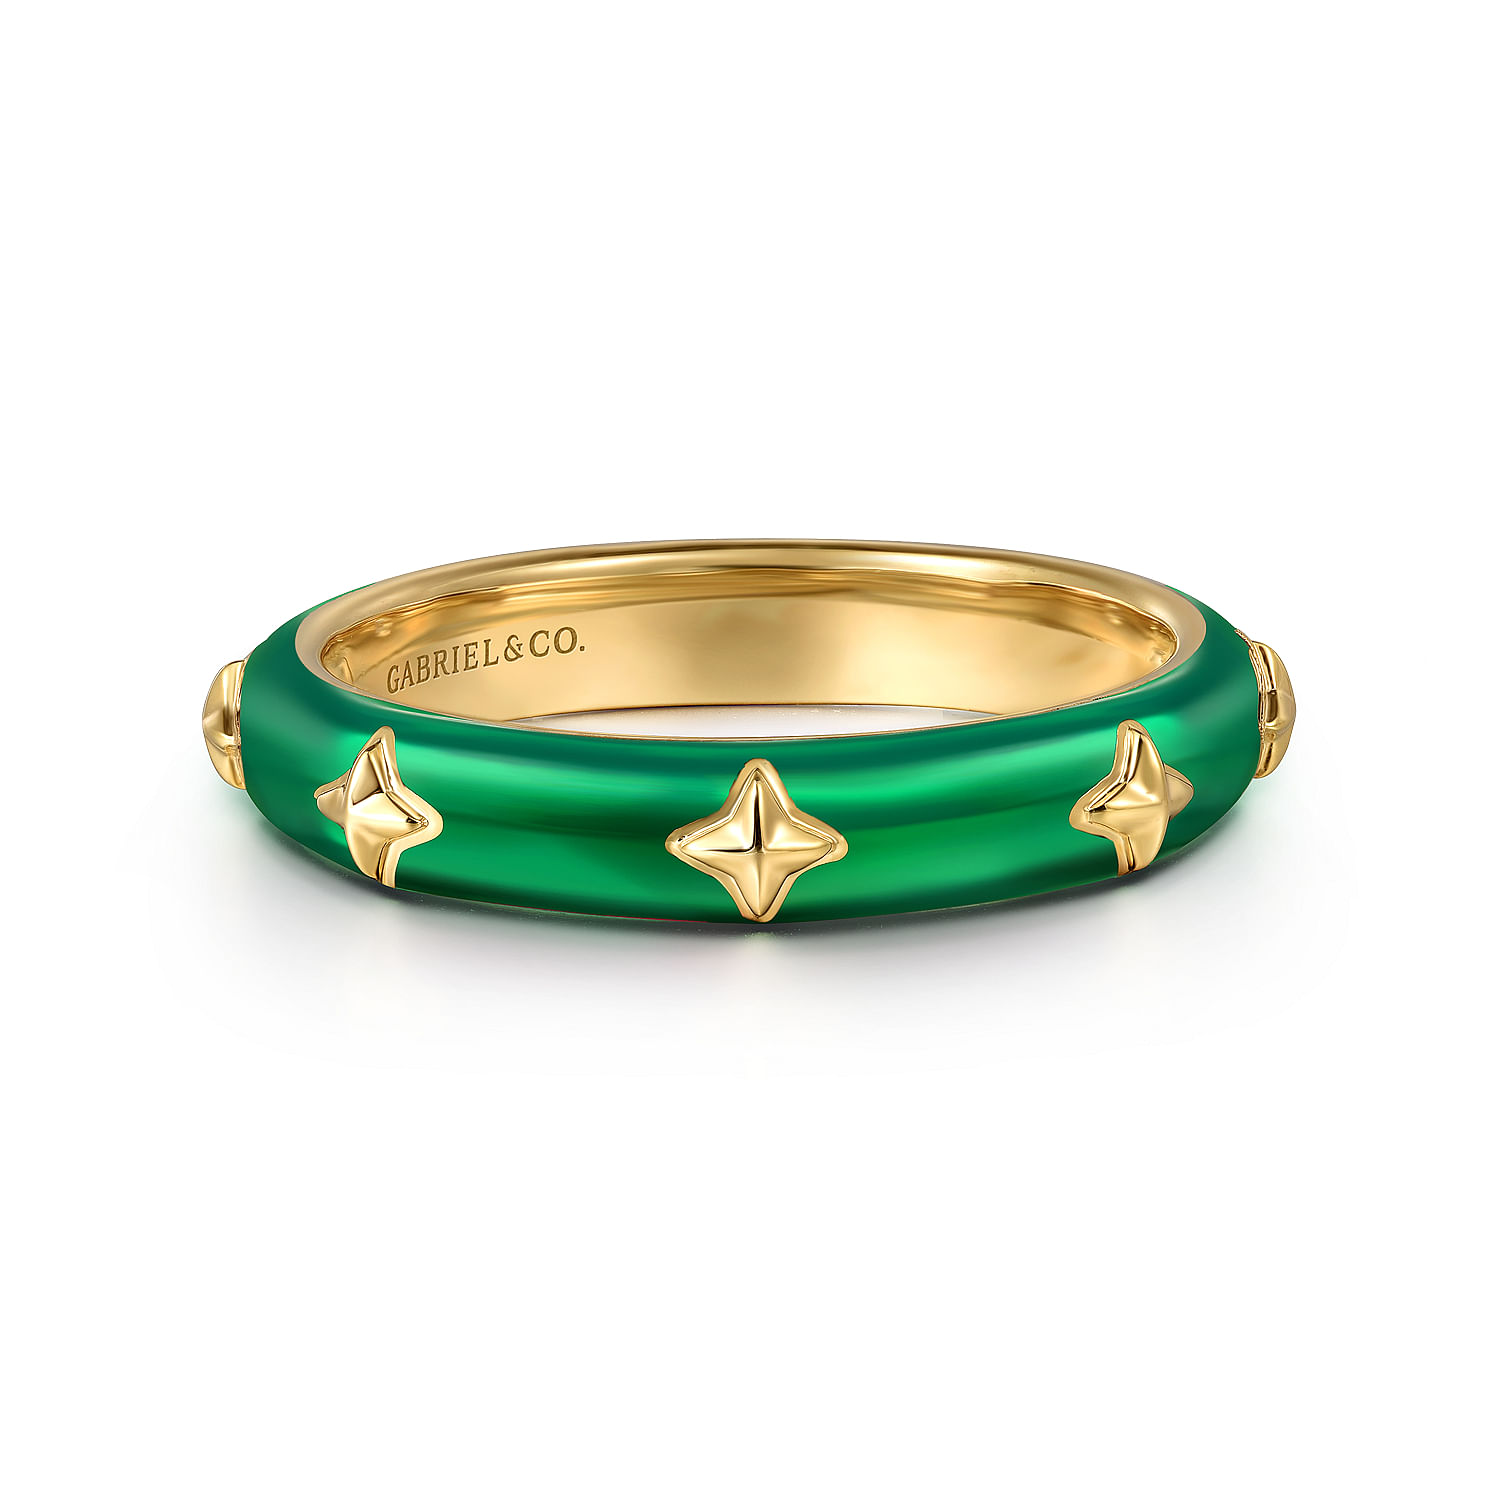 Gabriel & Co. 14K Yellow Gold Green Enamel Ring